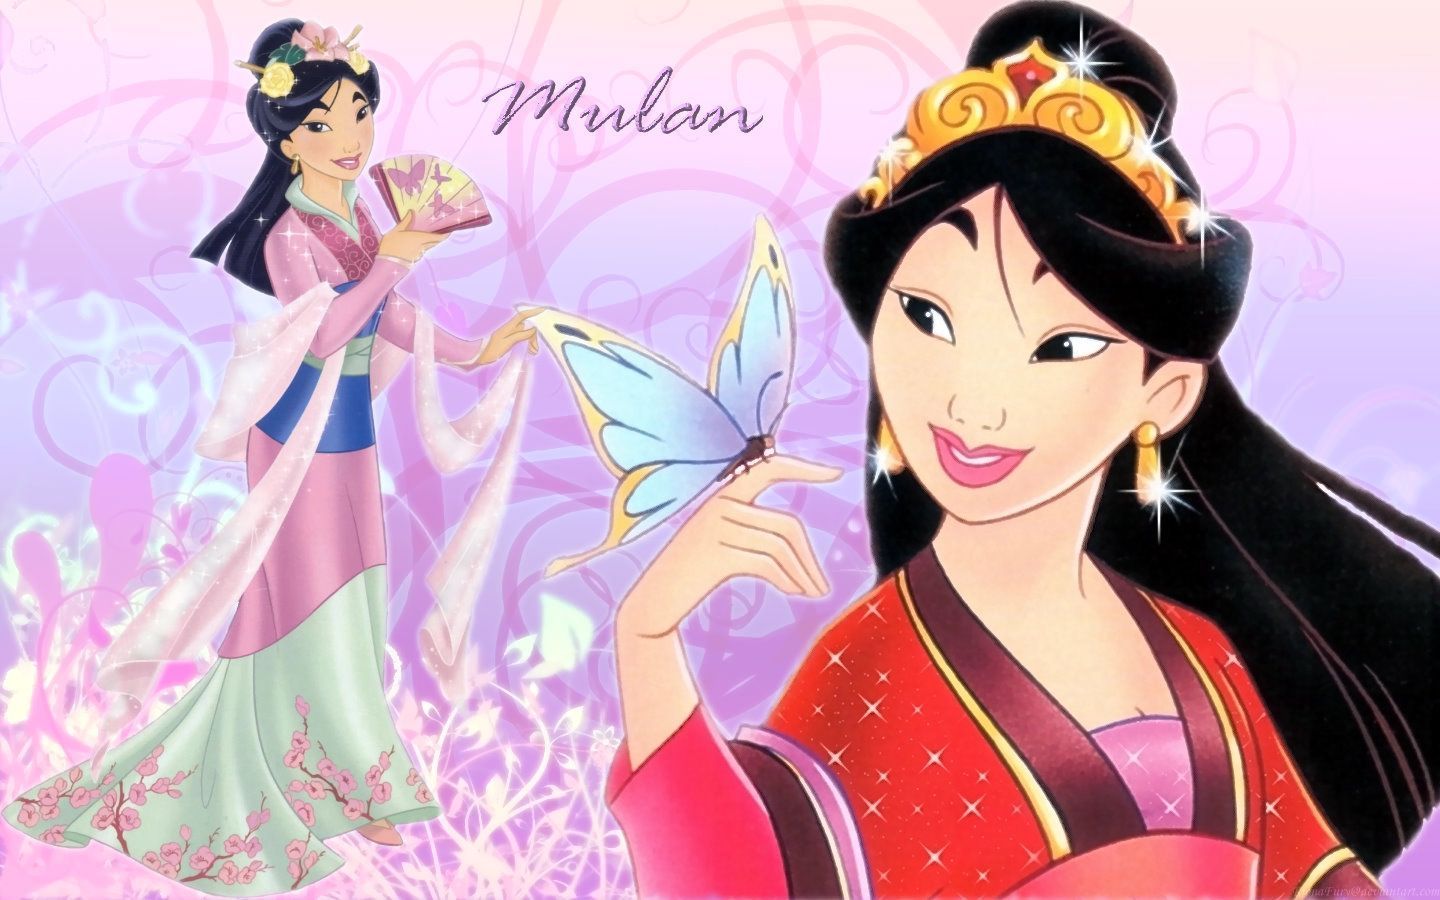 Disney Princess Wallpaper: Disney Princess Mulan. Disney princess wallpaper, Disney princess fan art, Disney princess picture